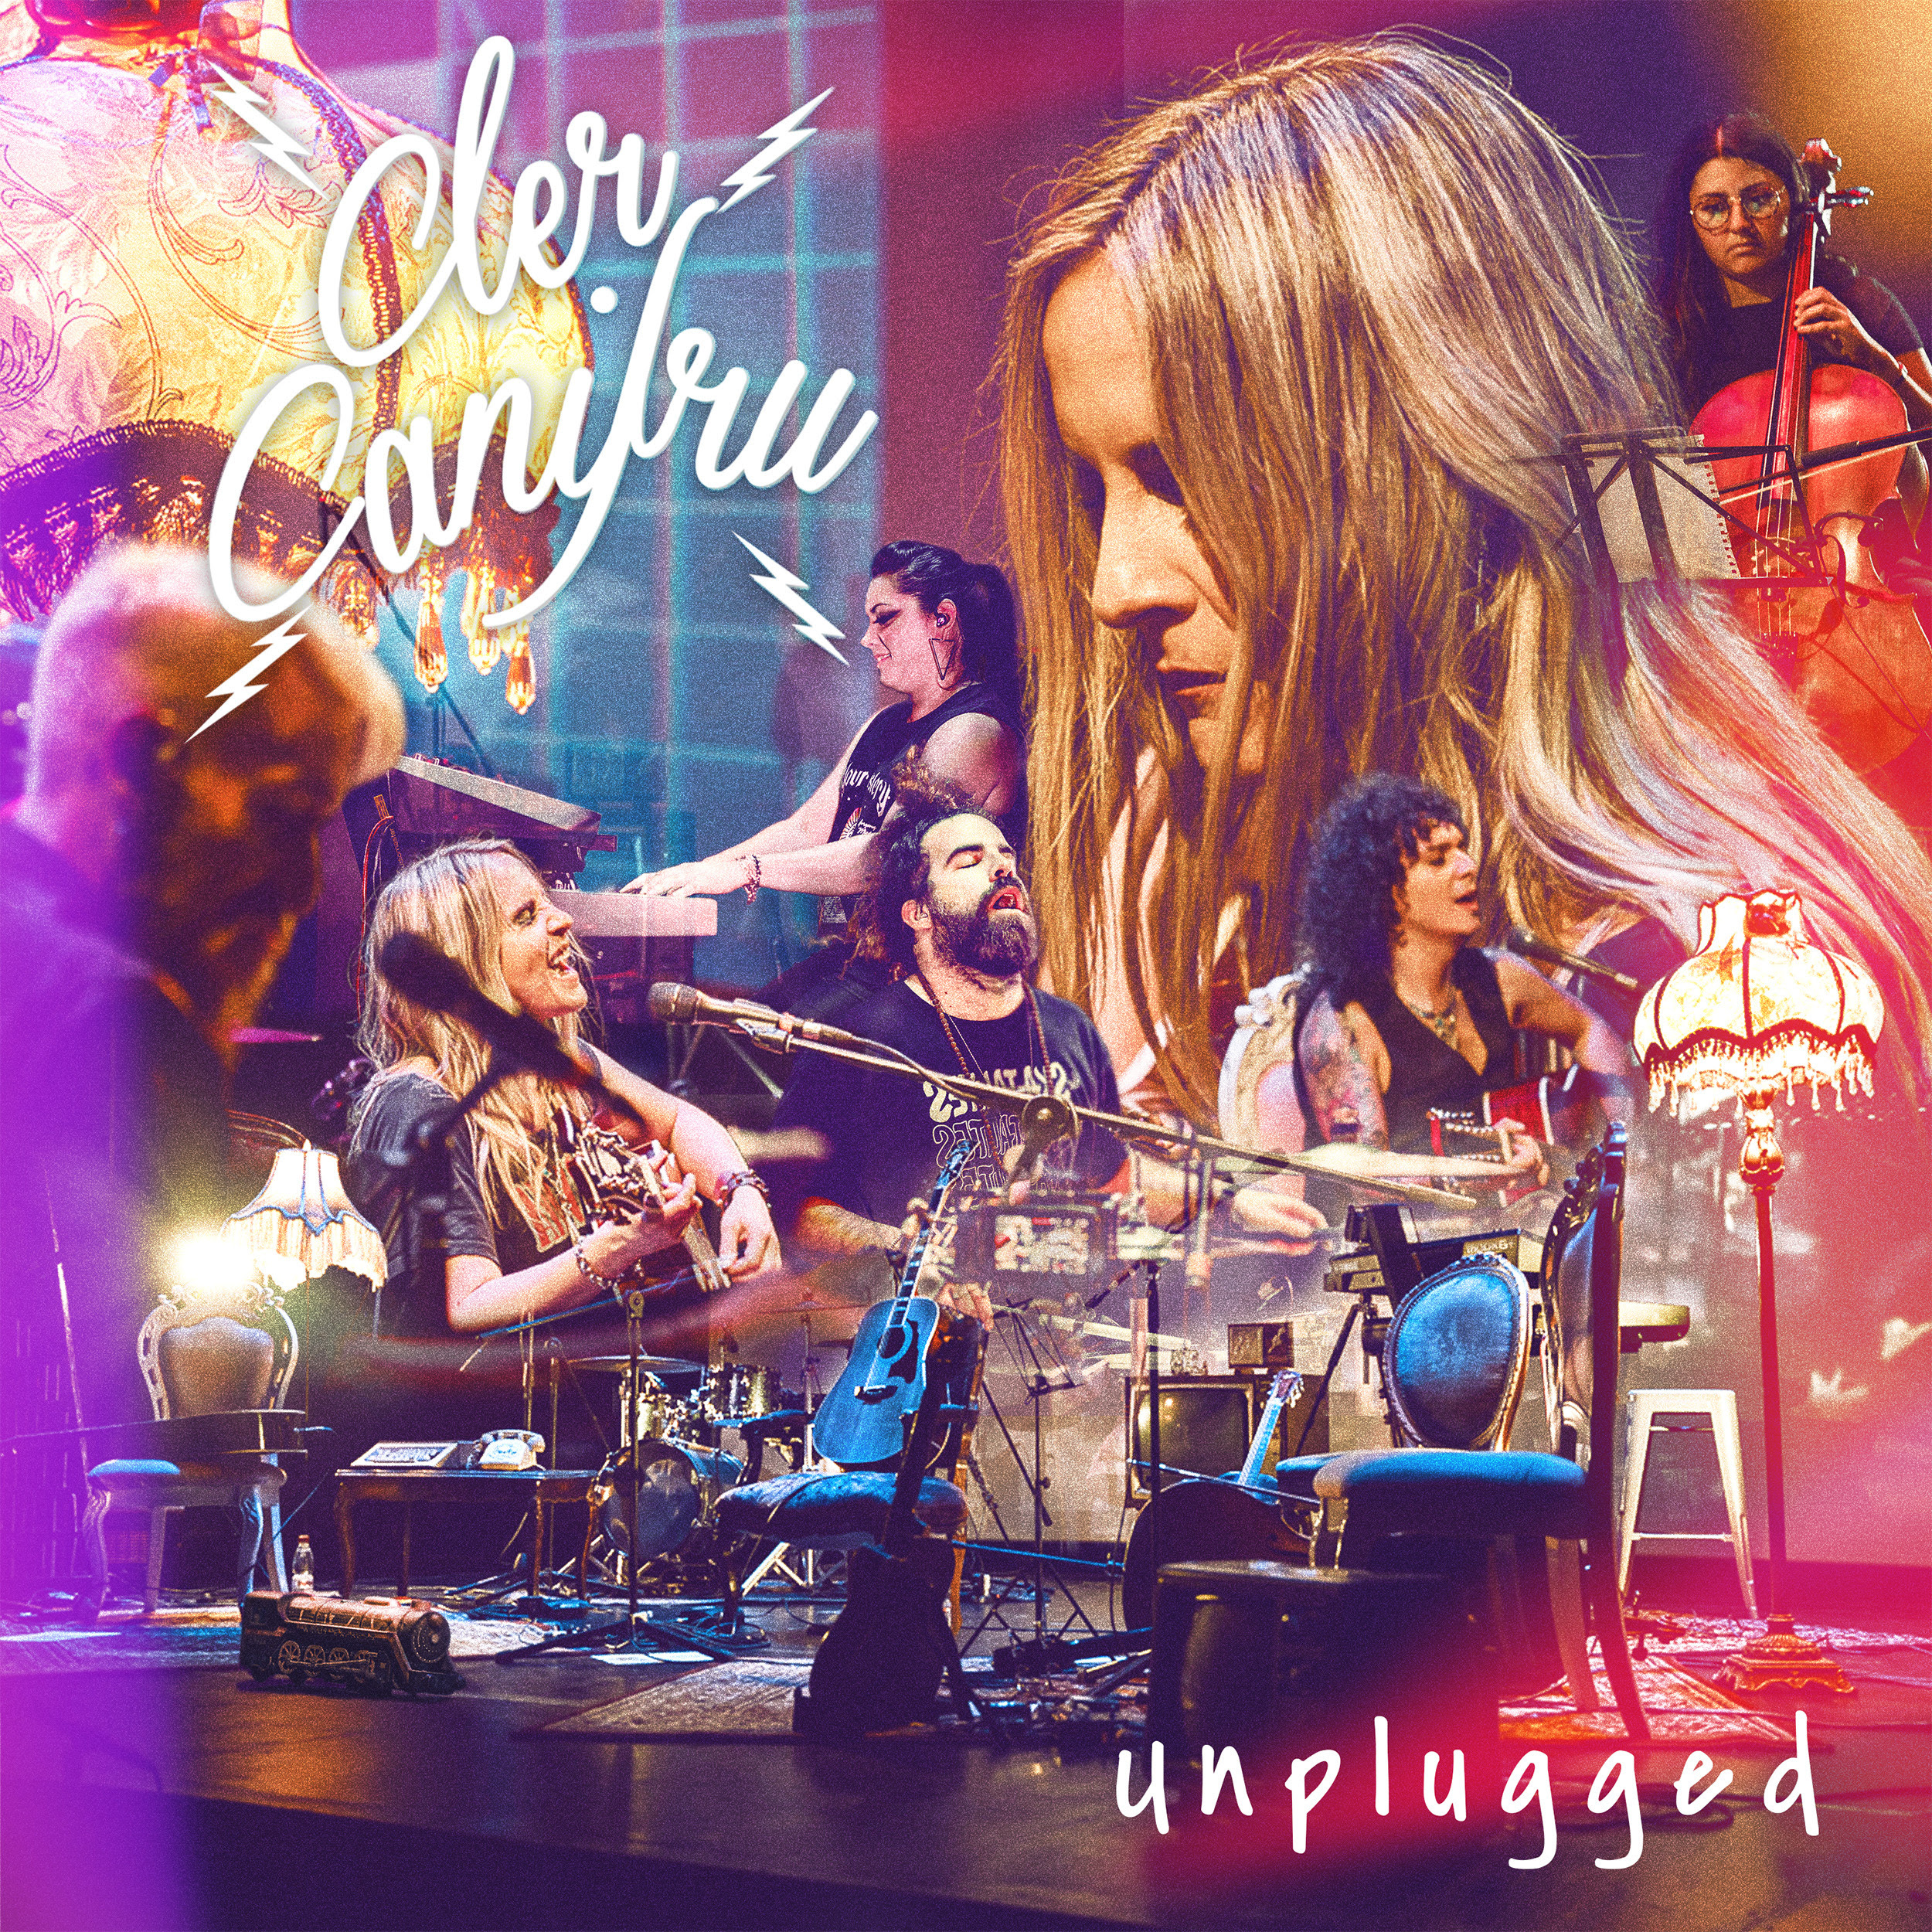 Un sonido como nunca antes: Cler Canifrú estrena anhelado álbum «Unplugged»